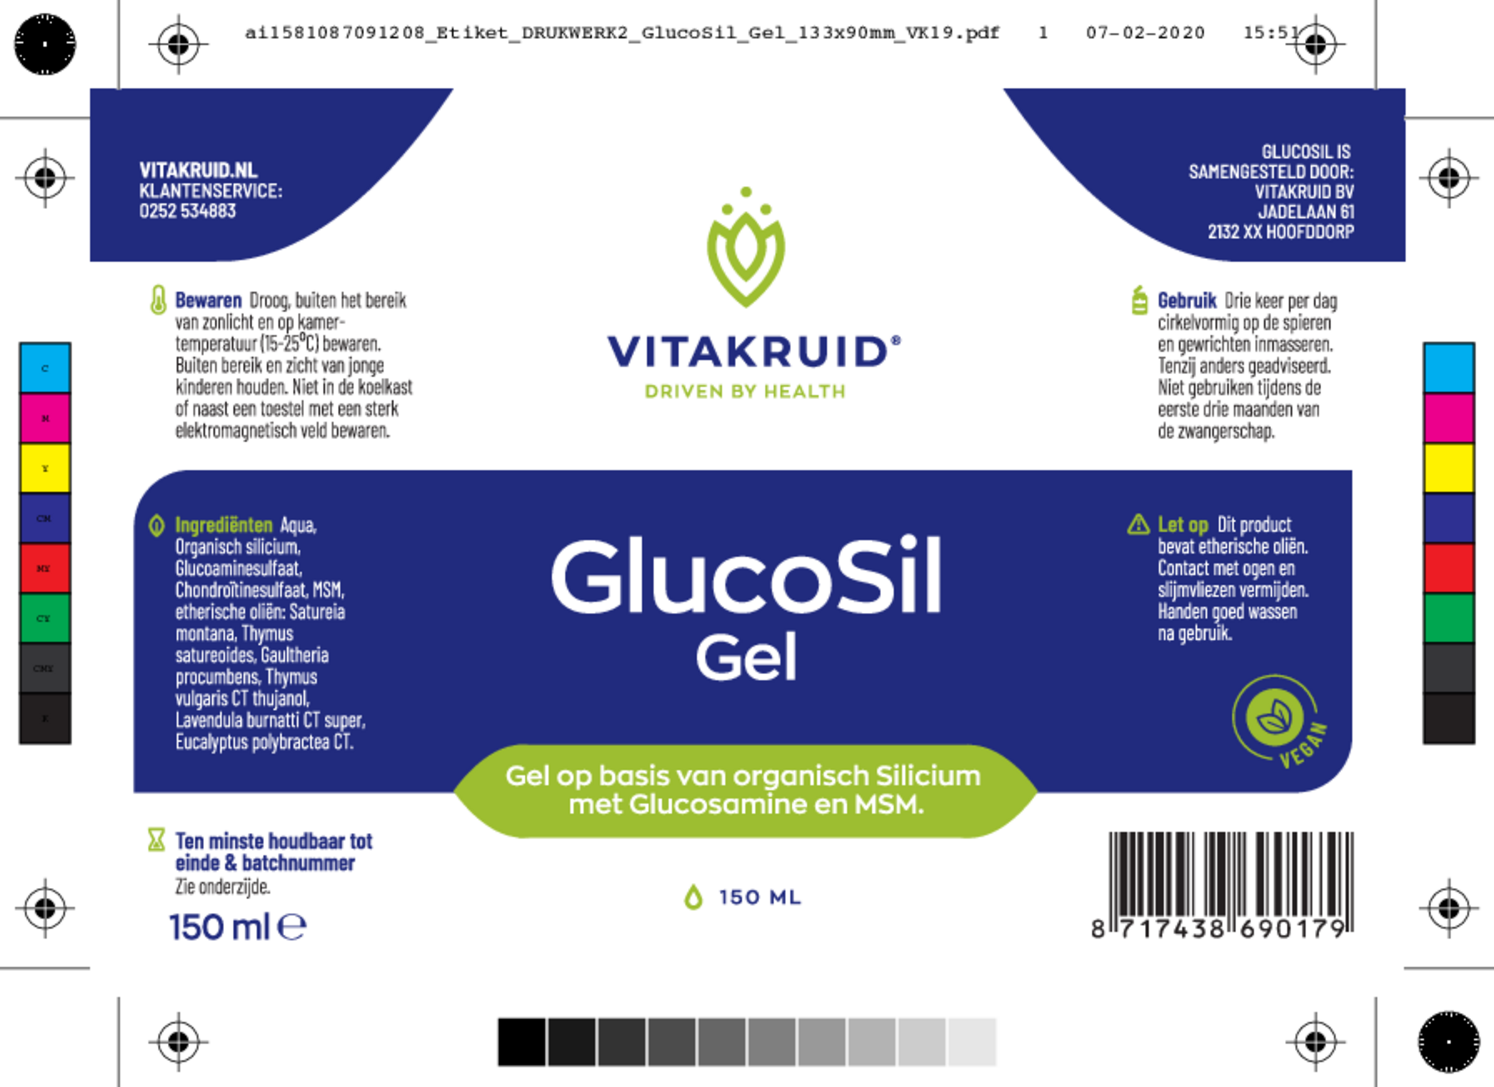 Glucosil Gel afbeelding van document #1, etiket